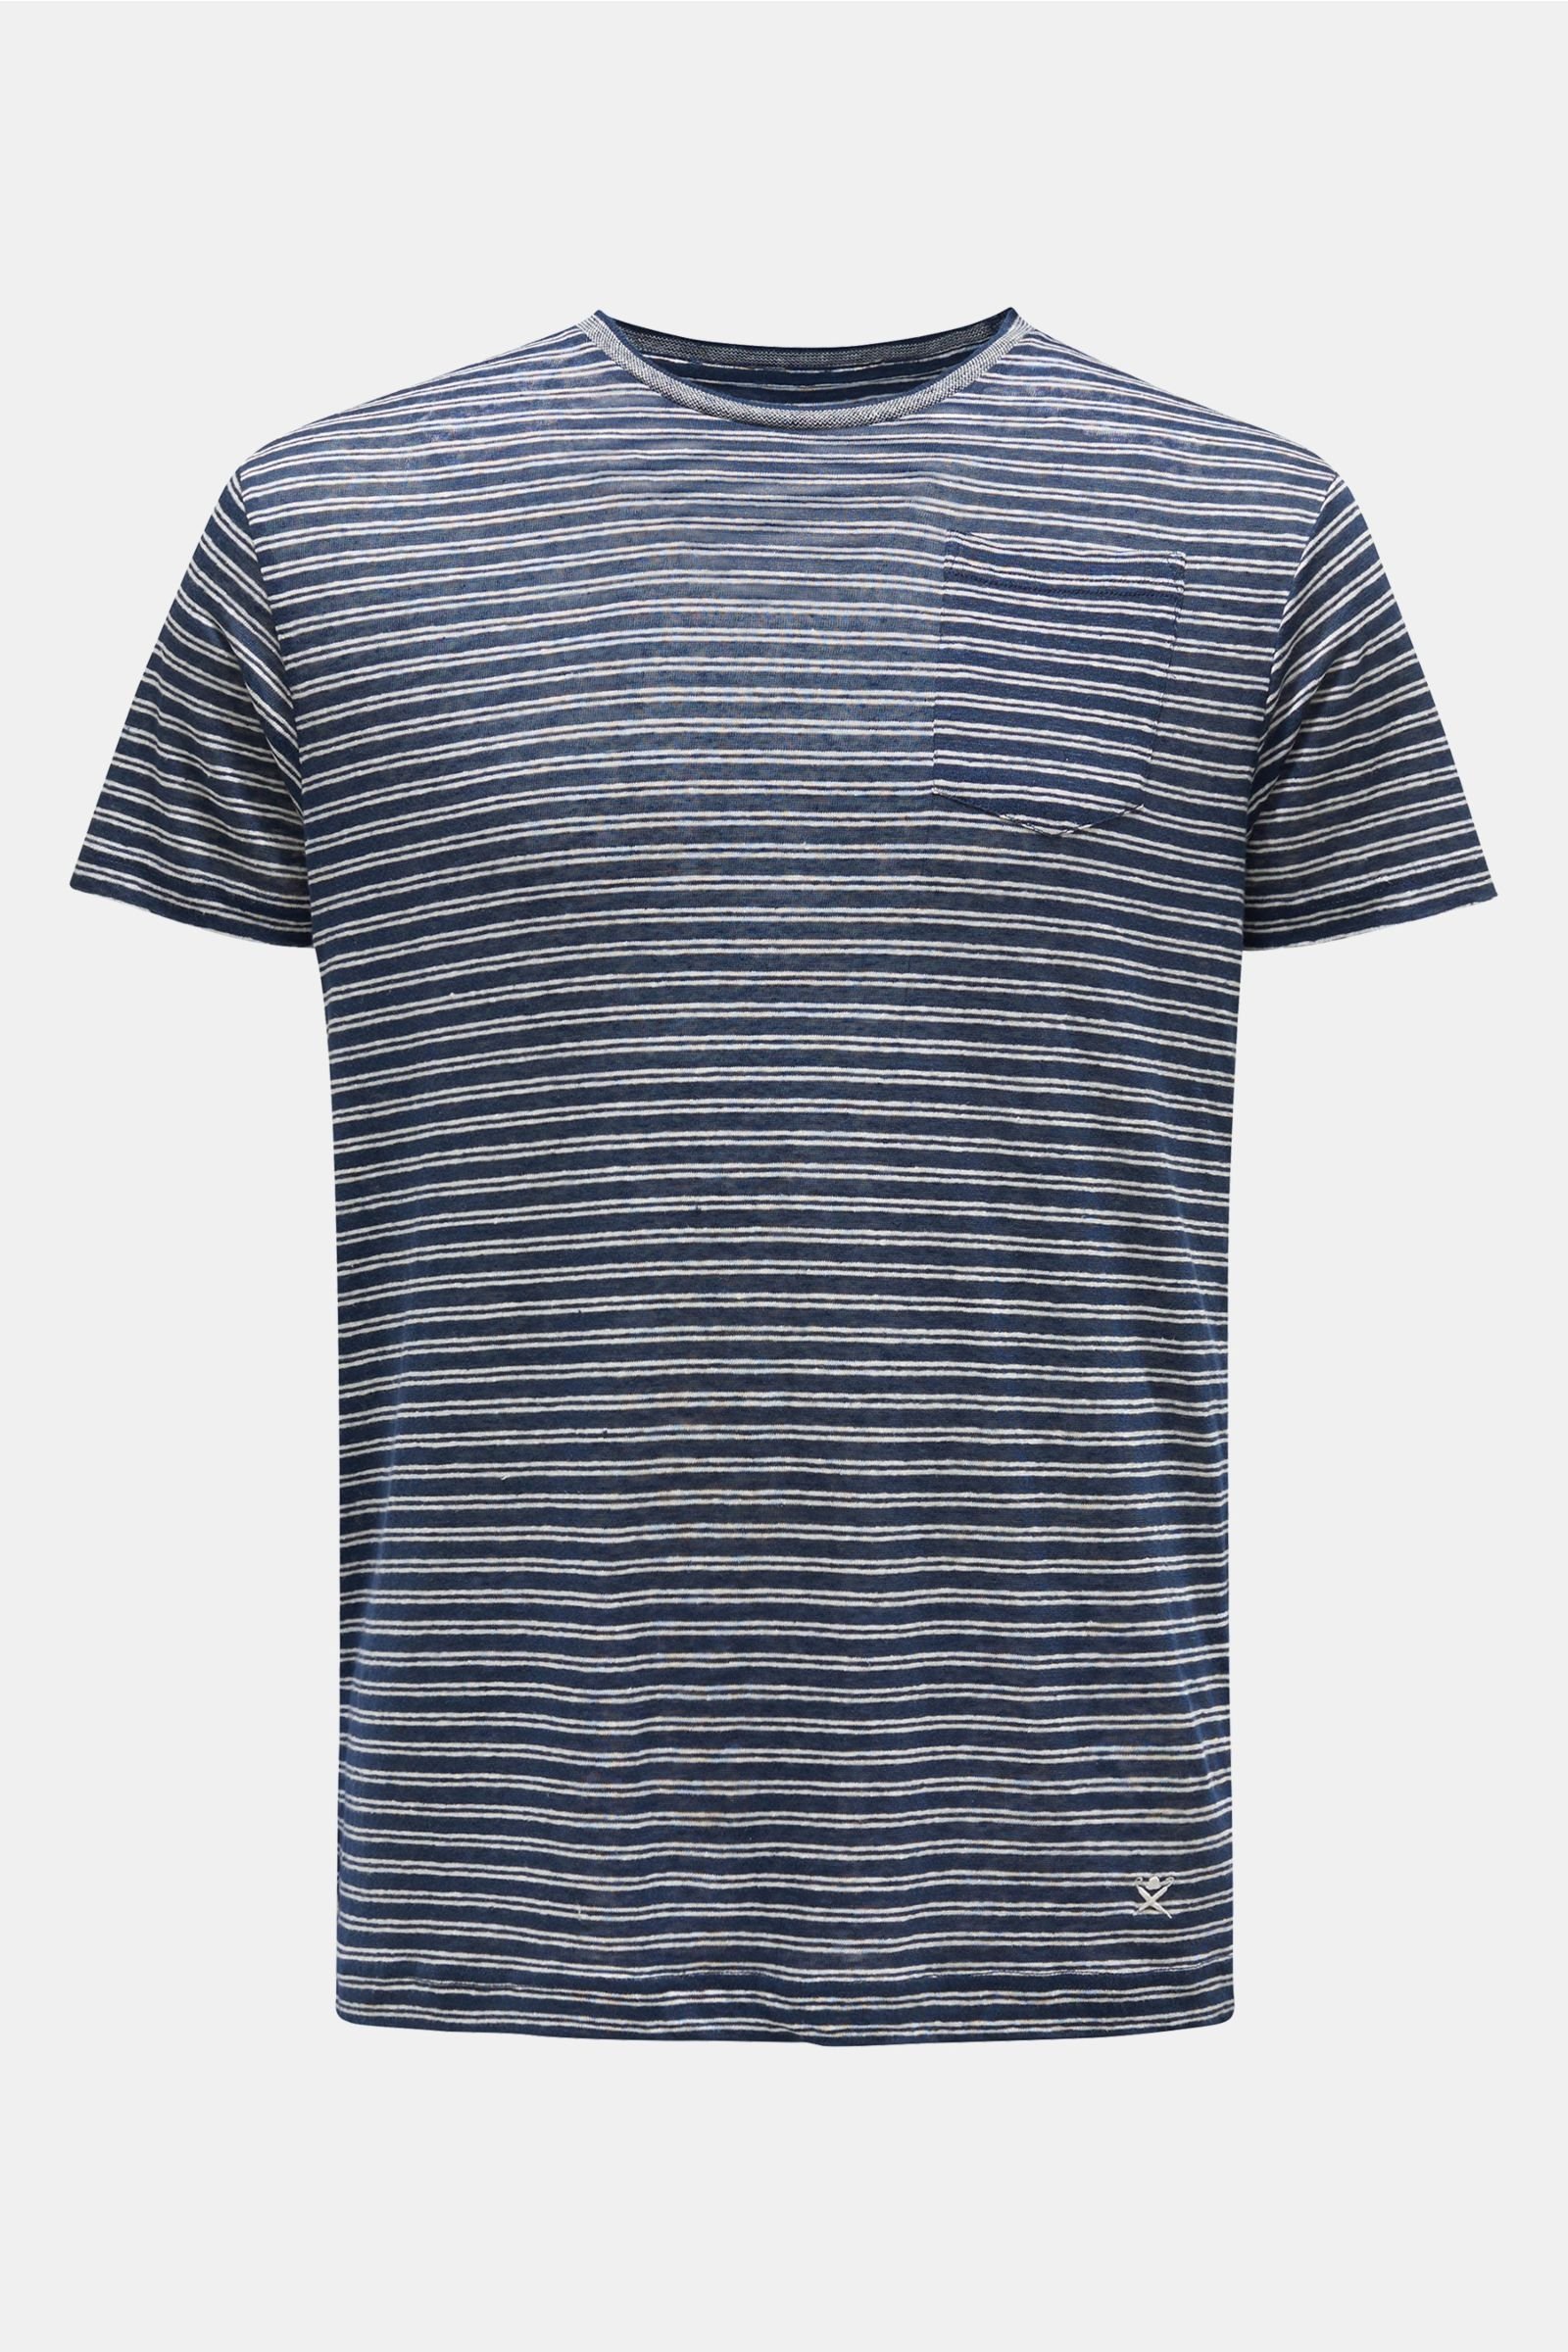 Linen crew neck T-shirt navy/white striped